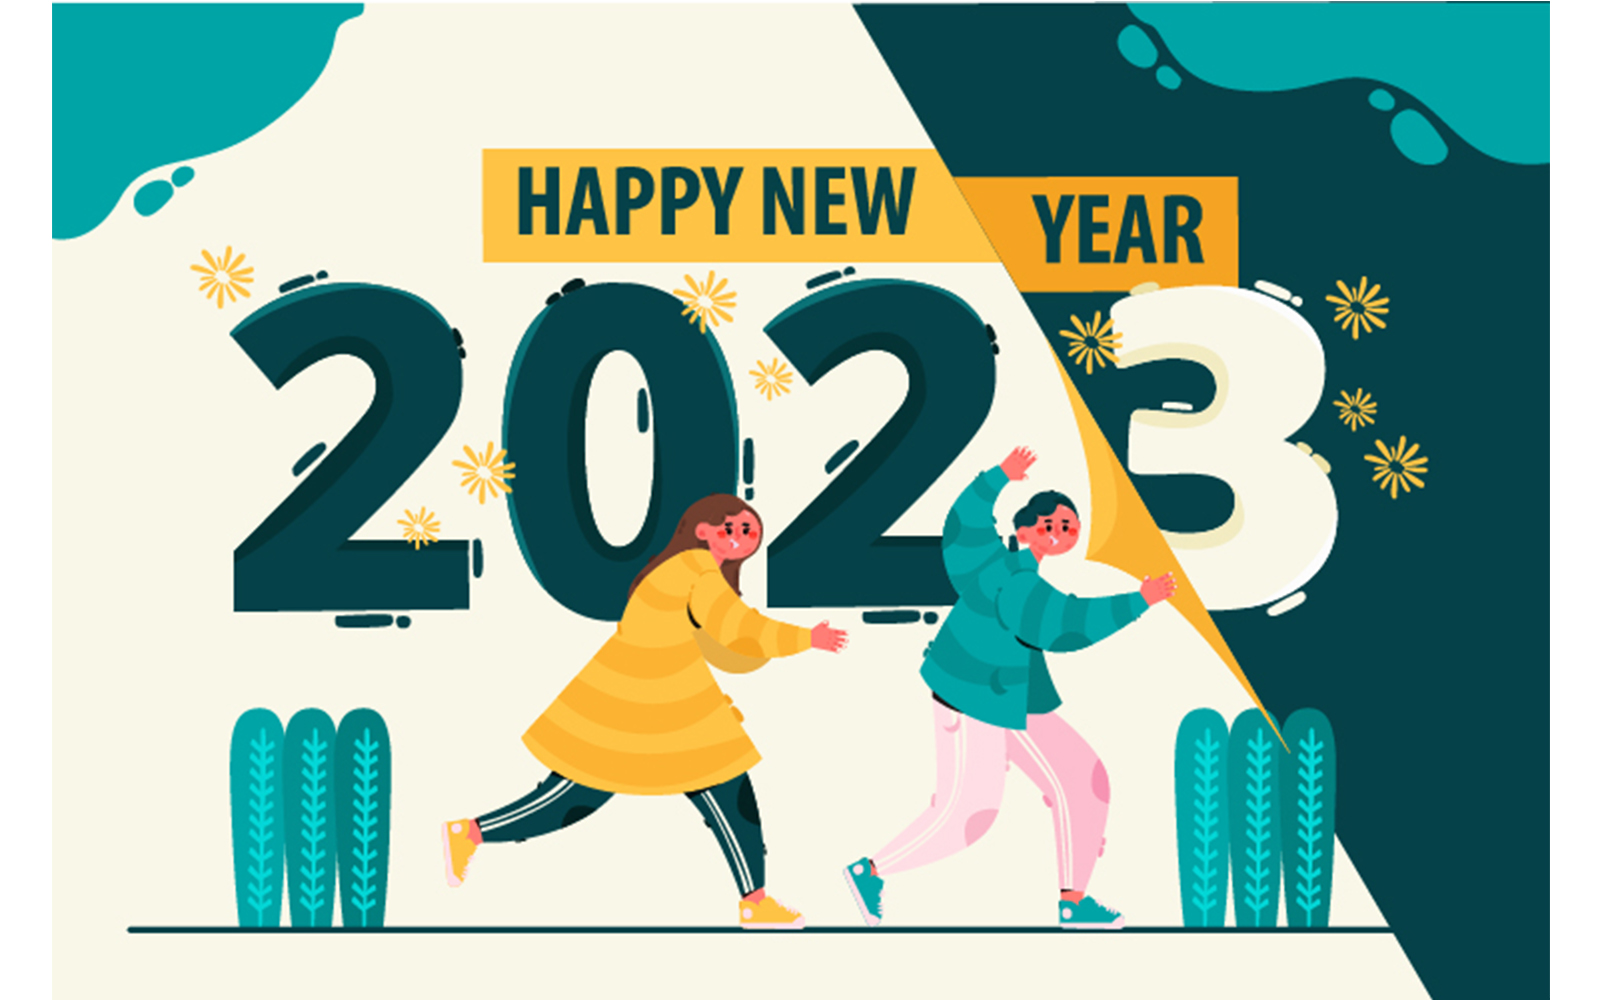 Changing New Year Background Illustration